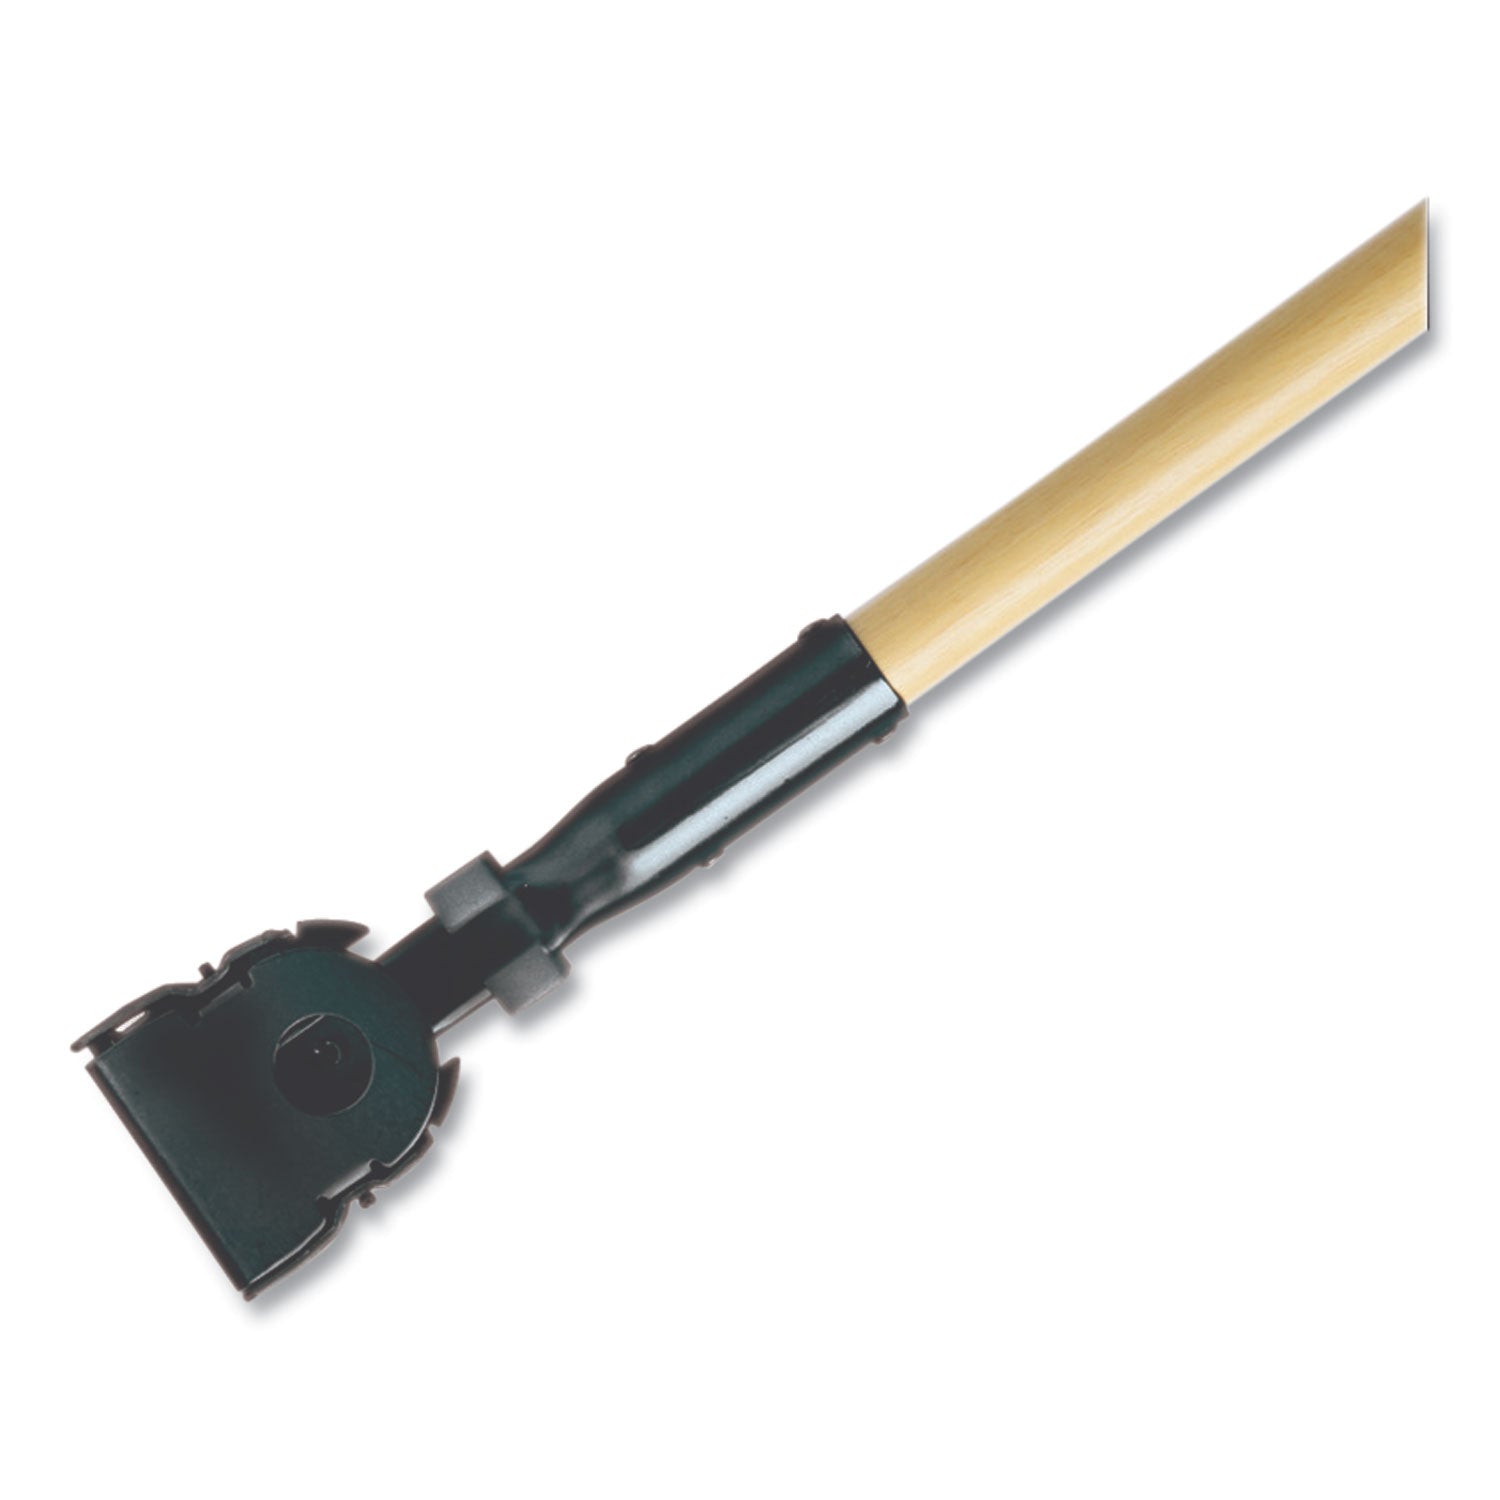 Snap-On Hardwood Dust Mop Handle, 1.5" dia x 60", Natural - 